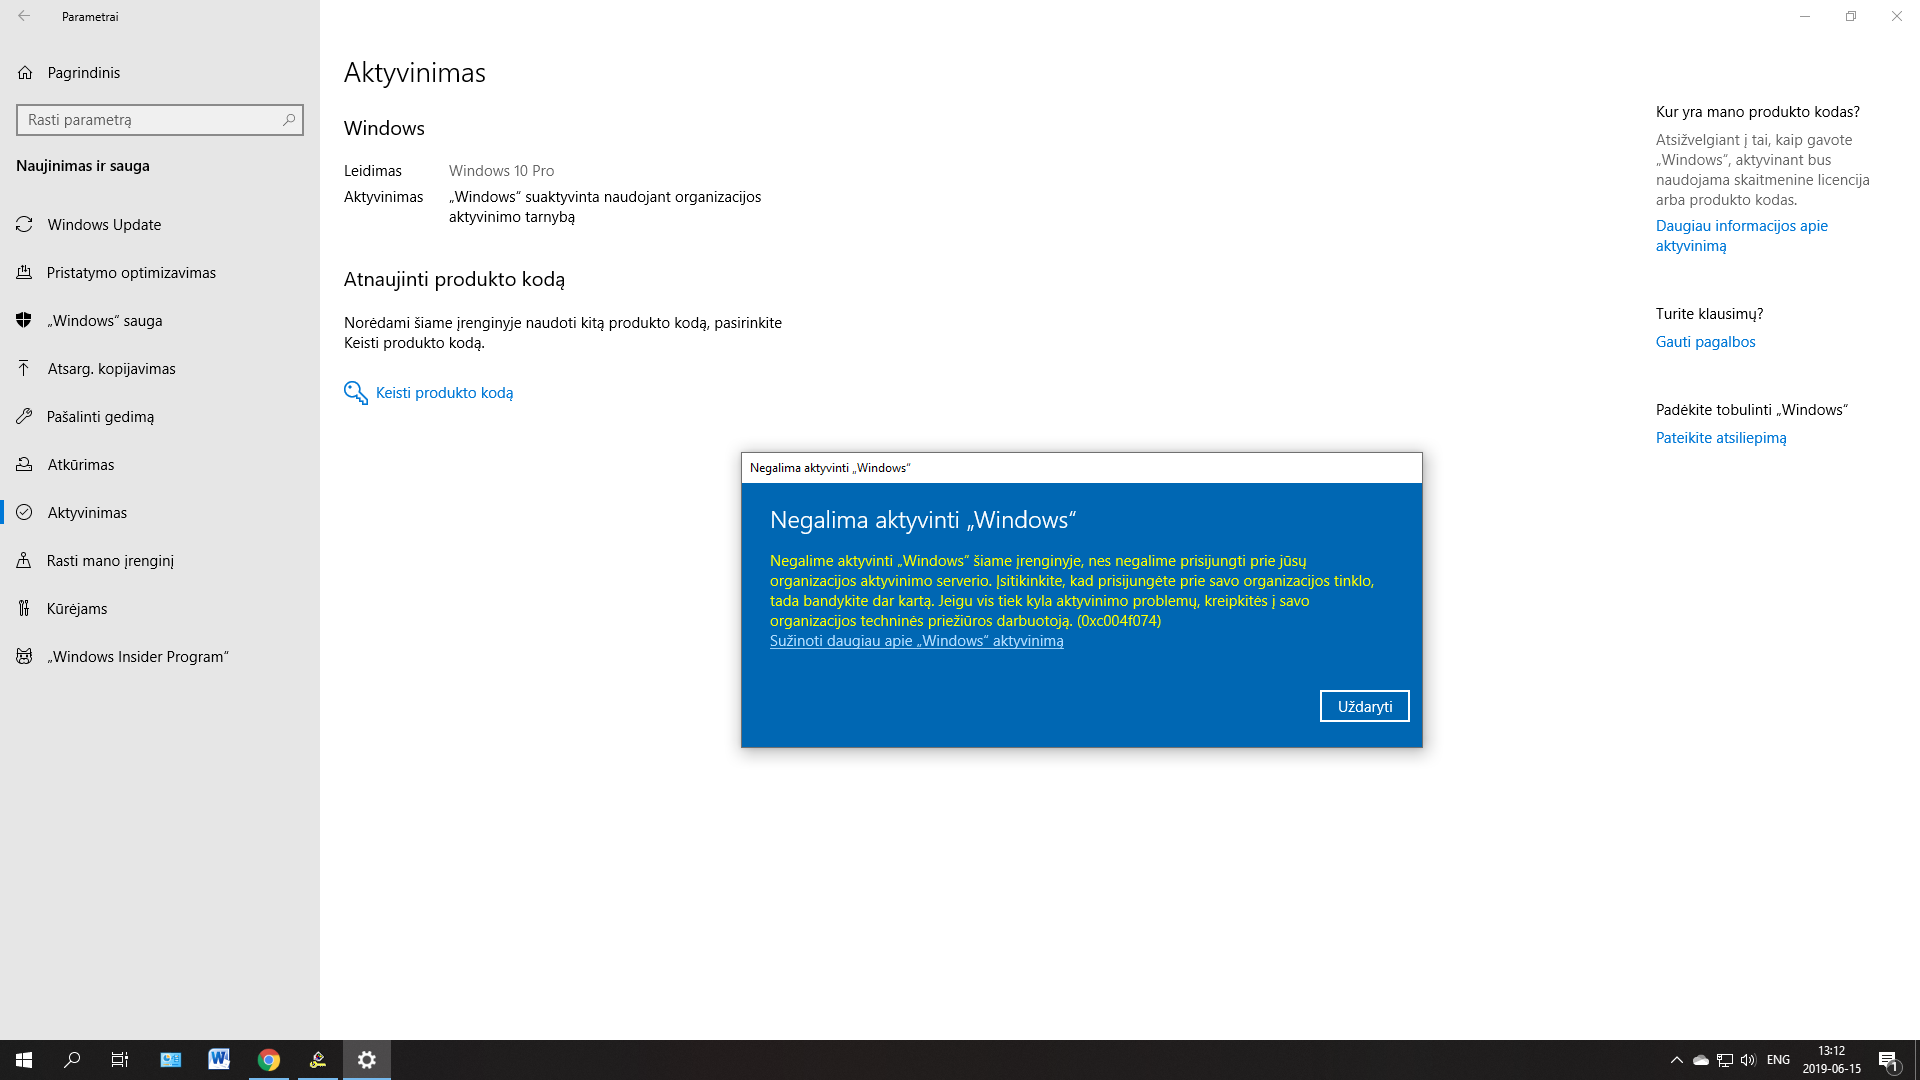 Windows license will expire soon. 9831a4f8-fd41-4ed2-8d2c-e4e9535db941?upload=true.png